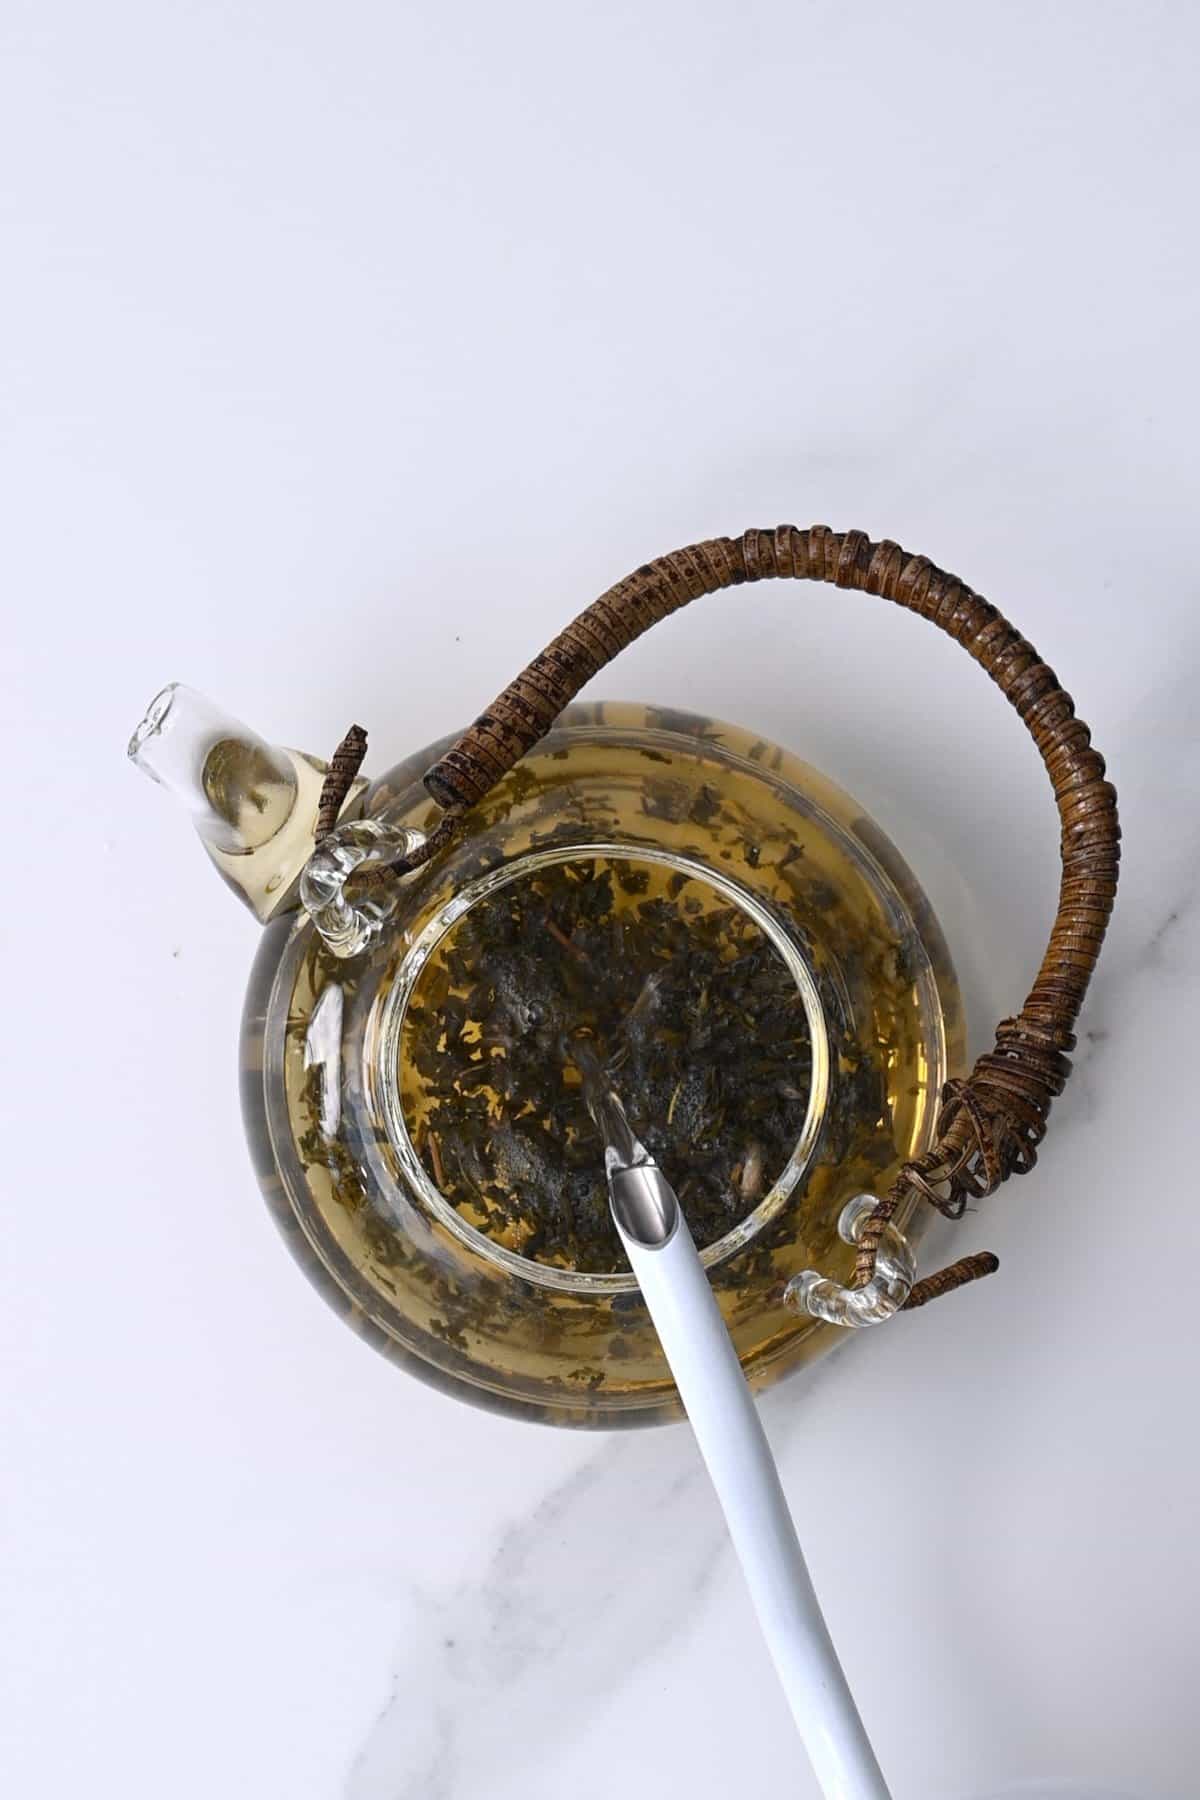 Steeping jasmine tea in a tea pot